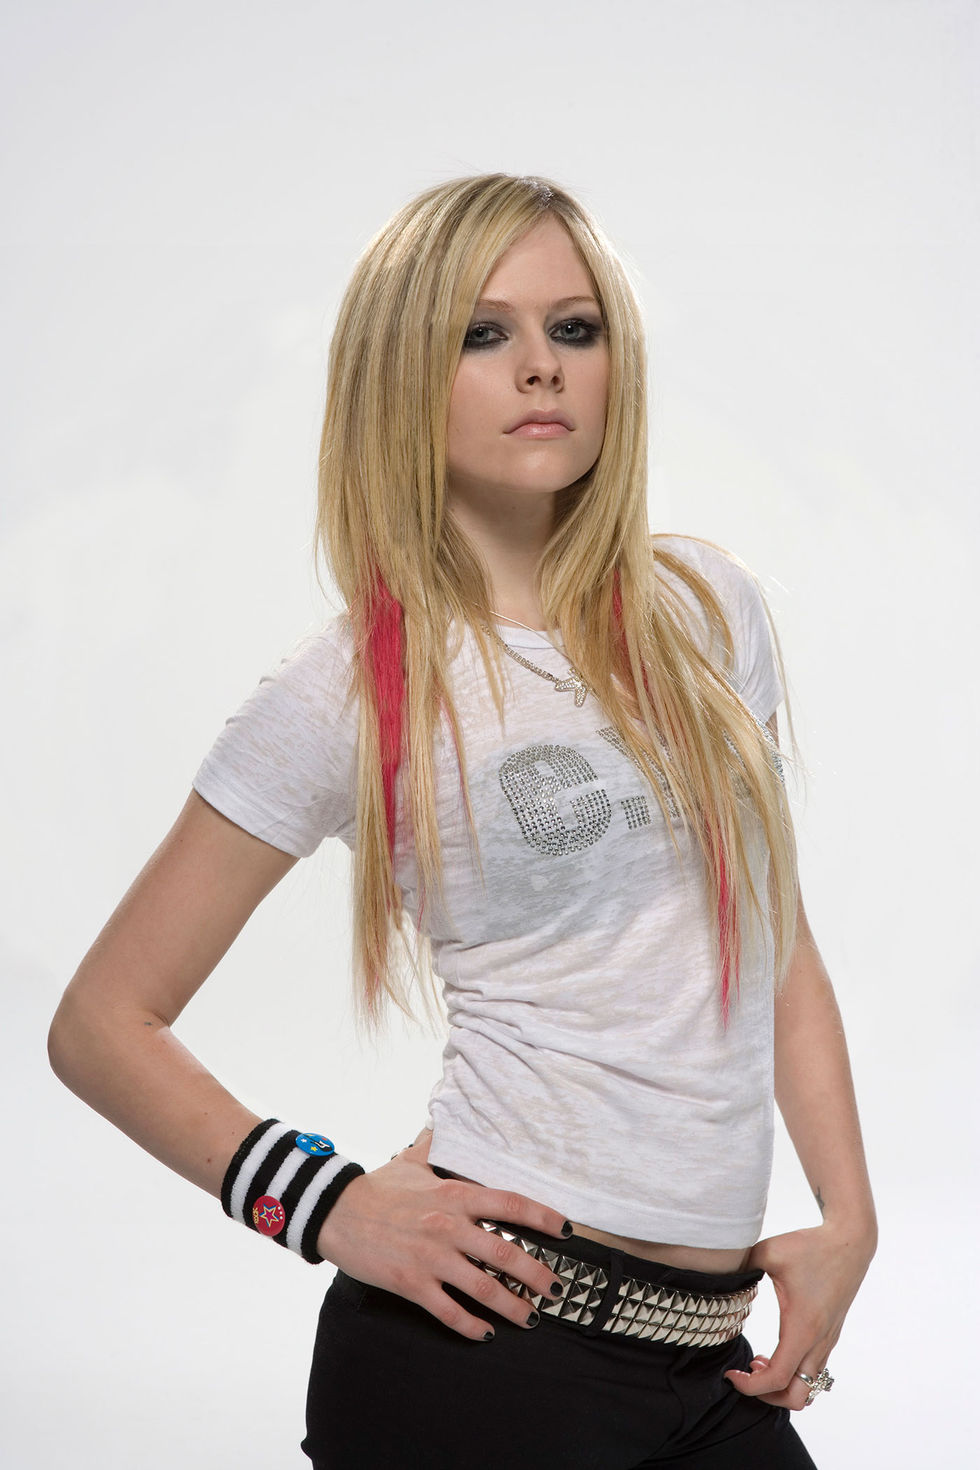 Pics of Avril Lavigne Q